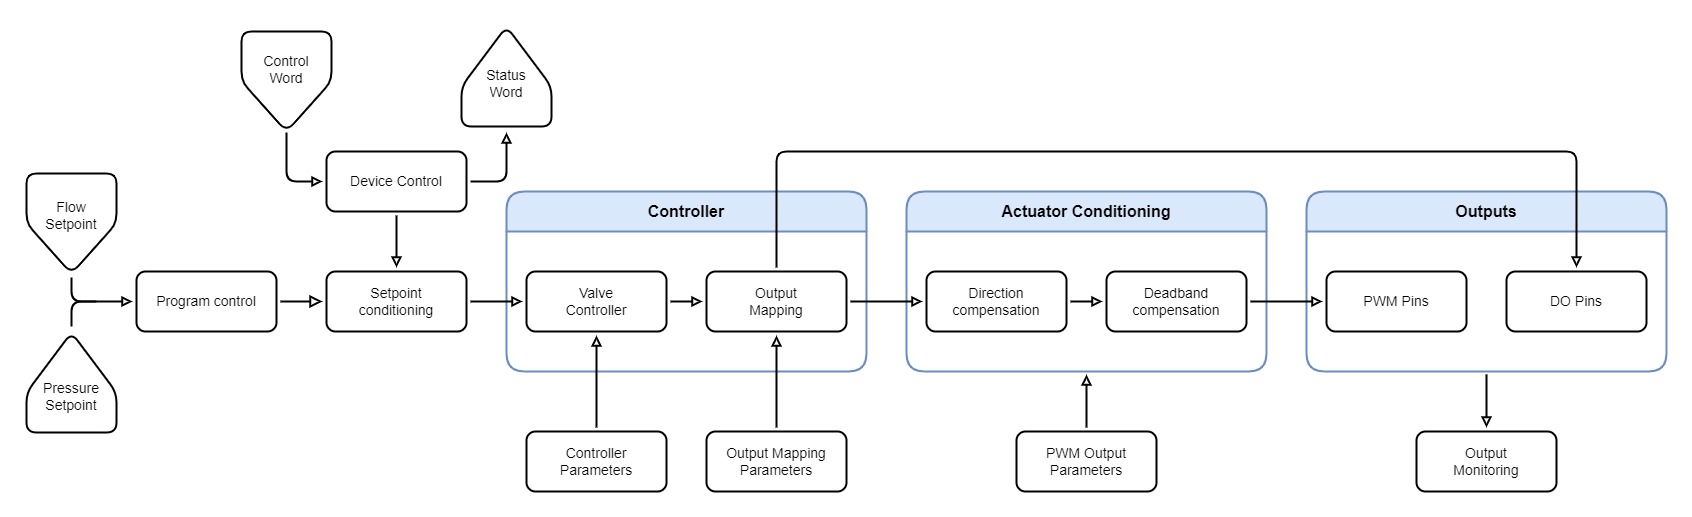 Figure 3: Valve controller block diagram based on CiA 408 device profile (Source: TK Engineering)